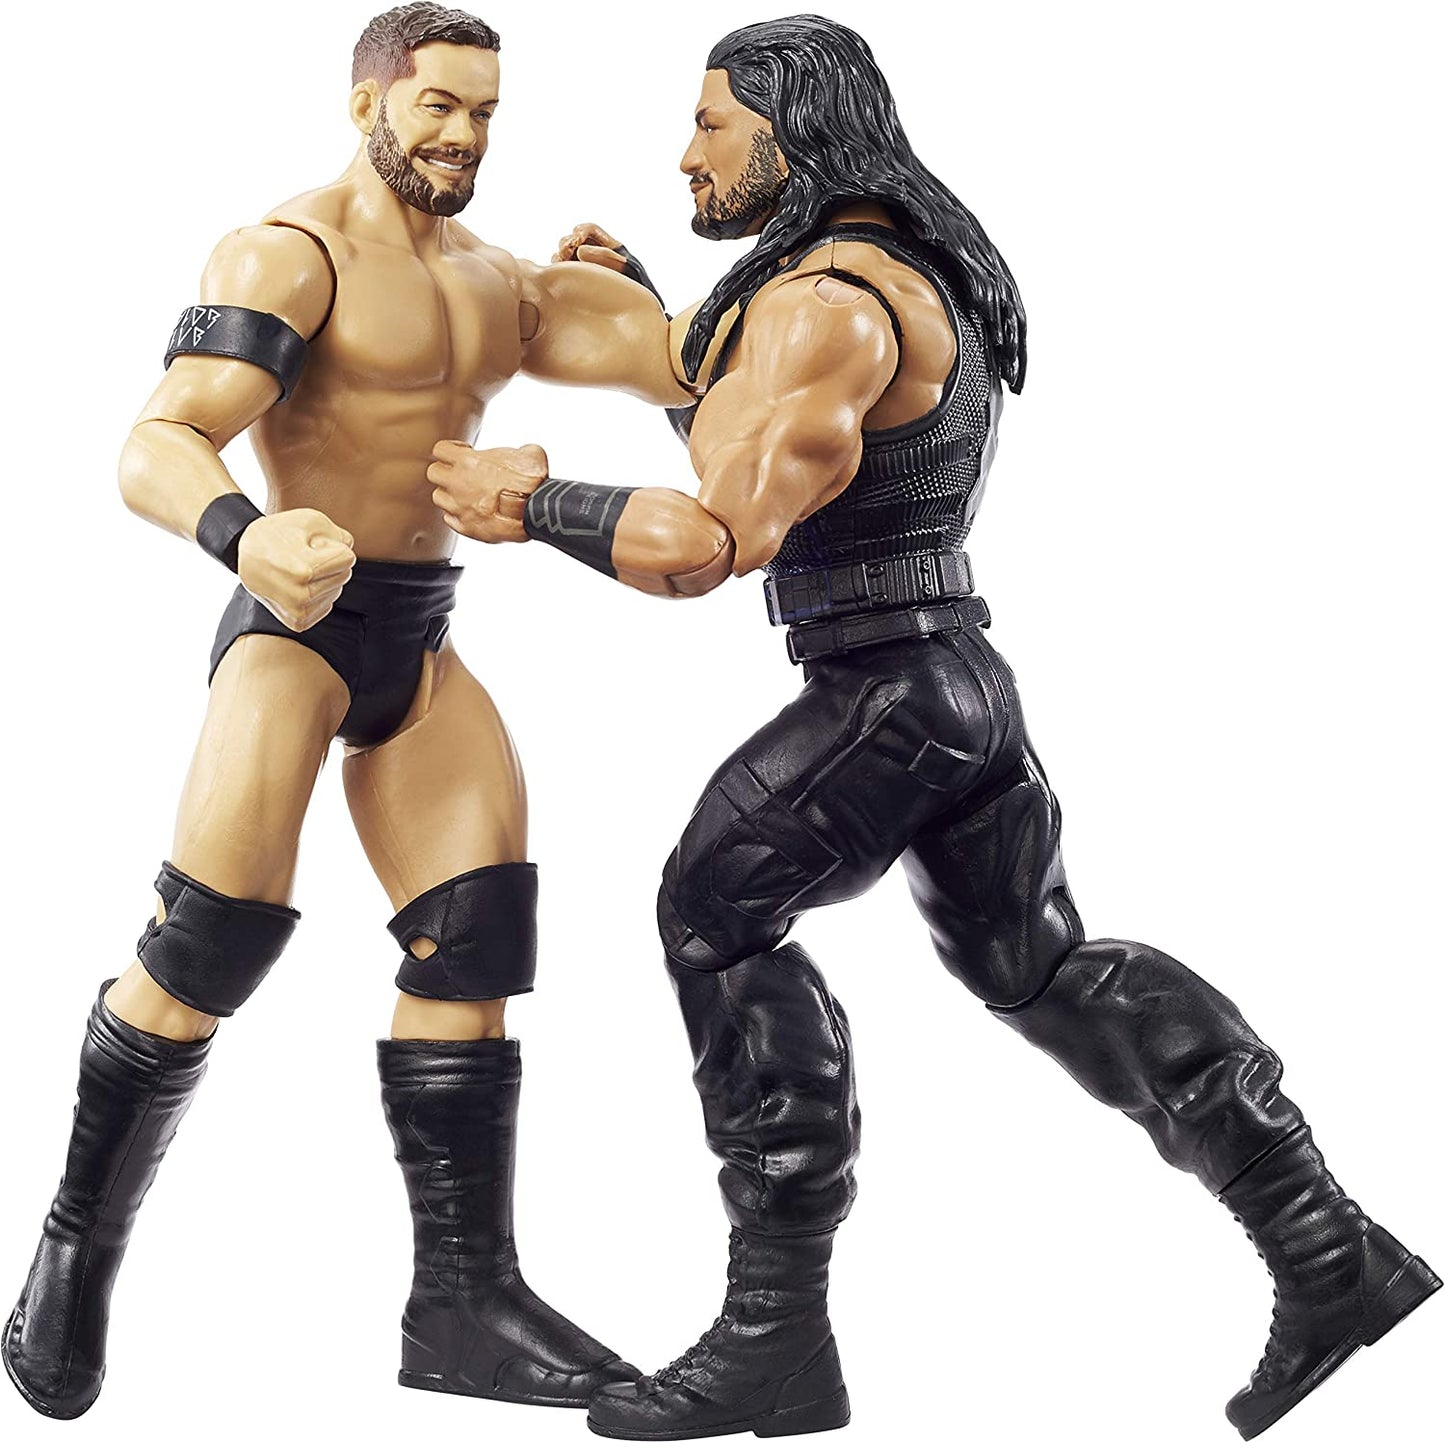 2020 WWE Mattel Basic Championship Showdown Series 1 Roman Reigns vs. Finn Balor